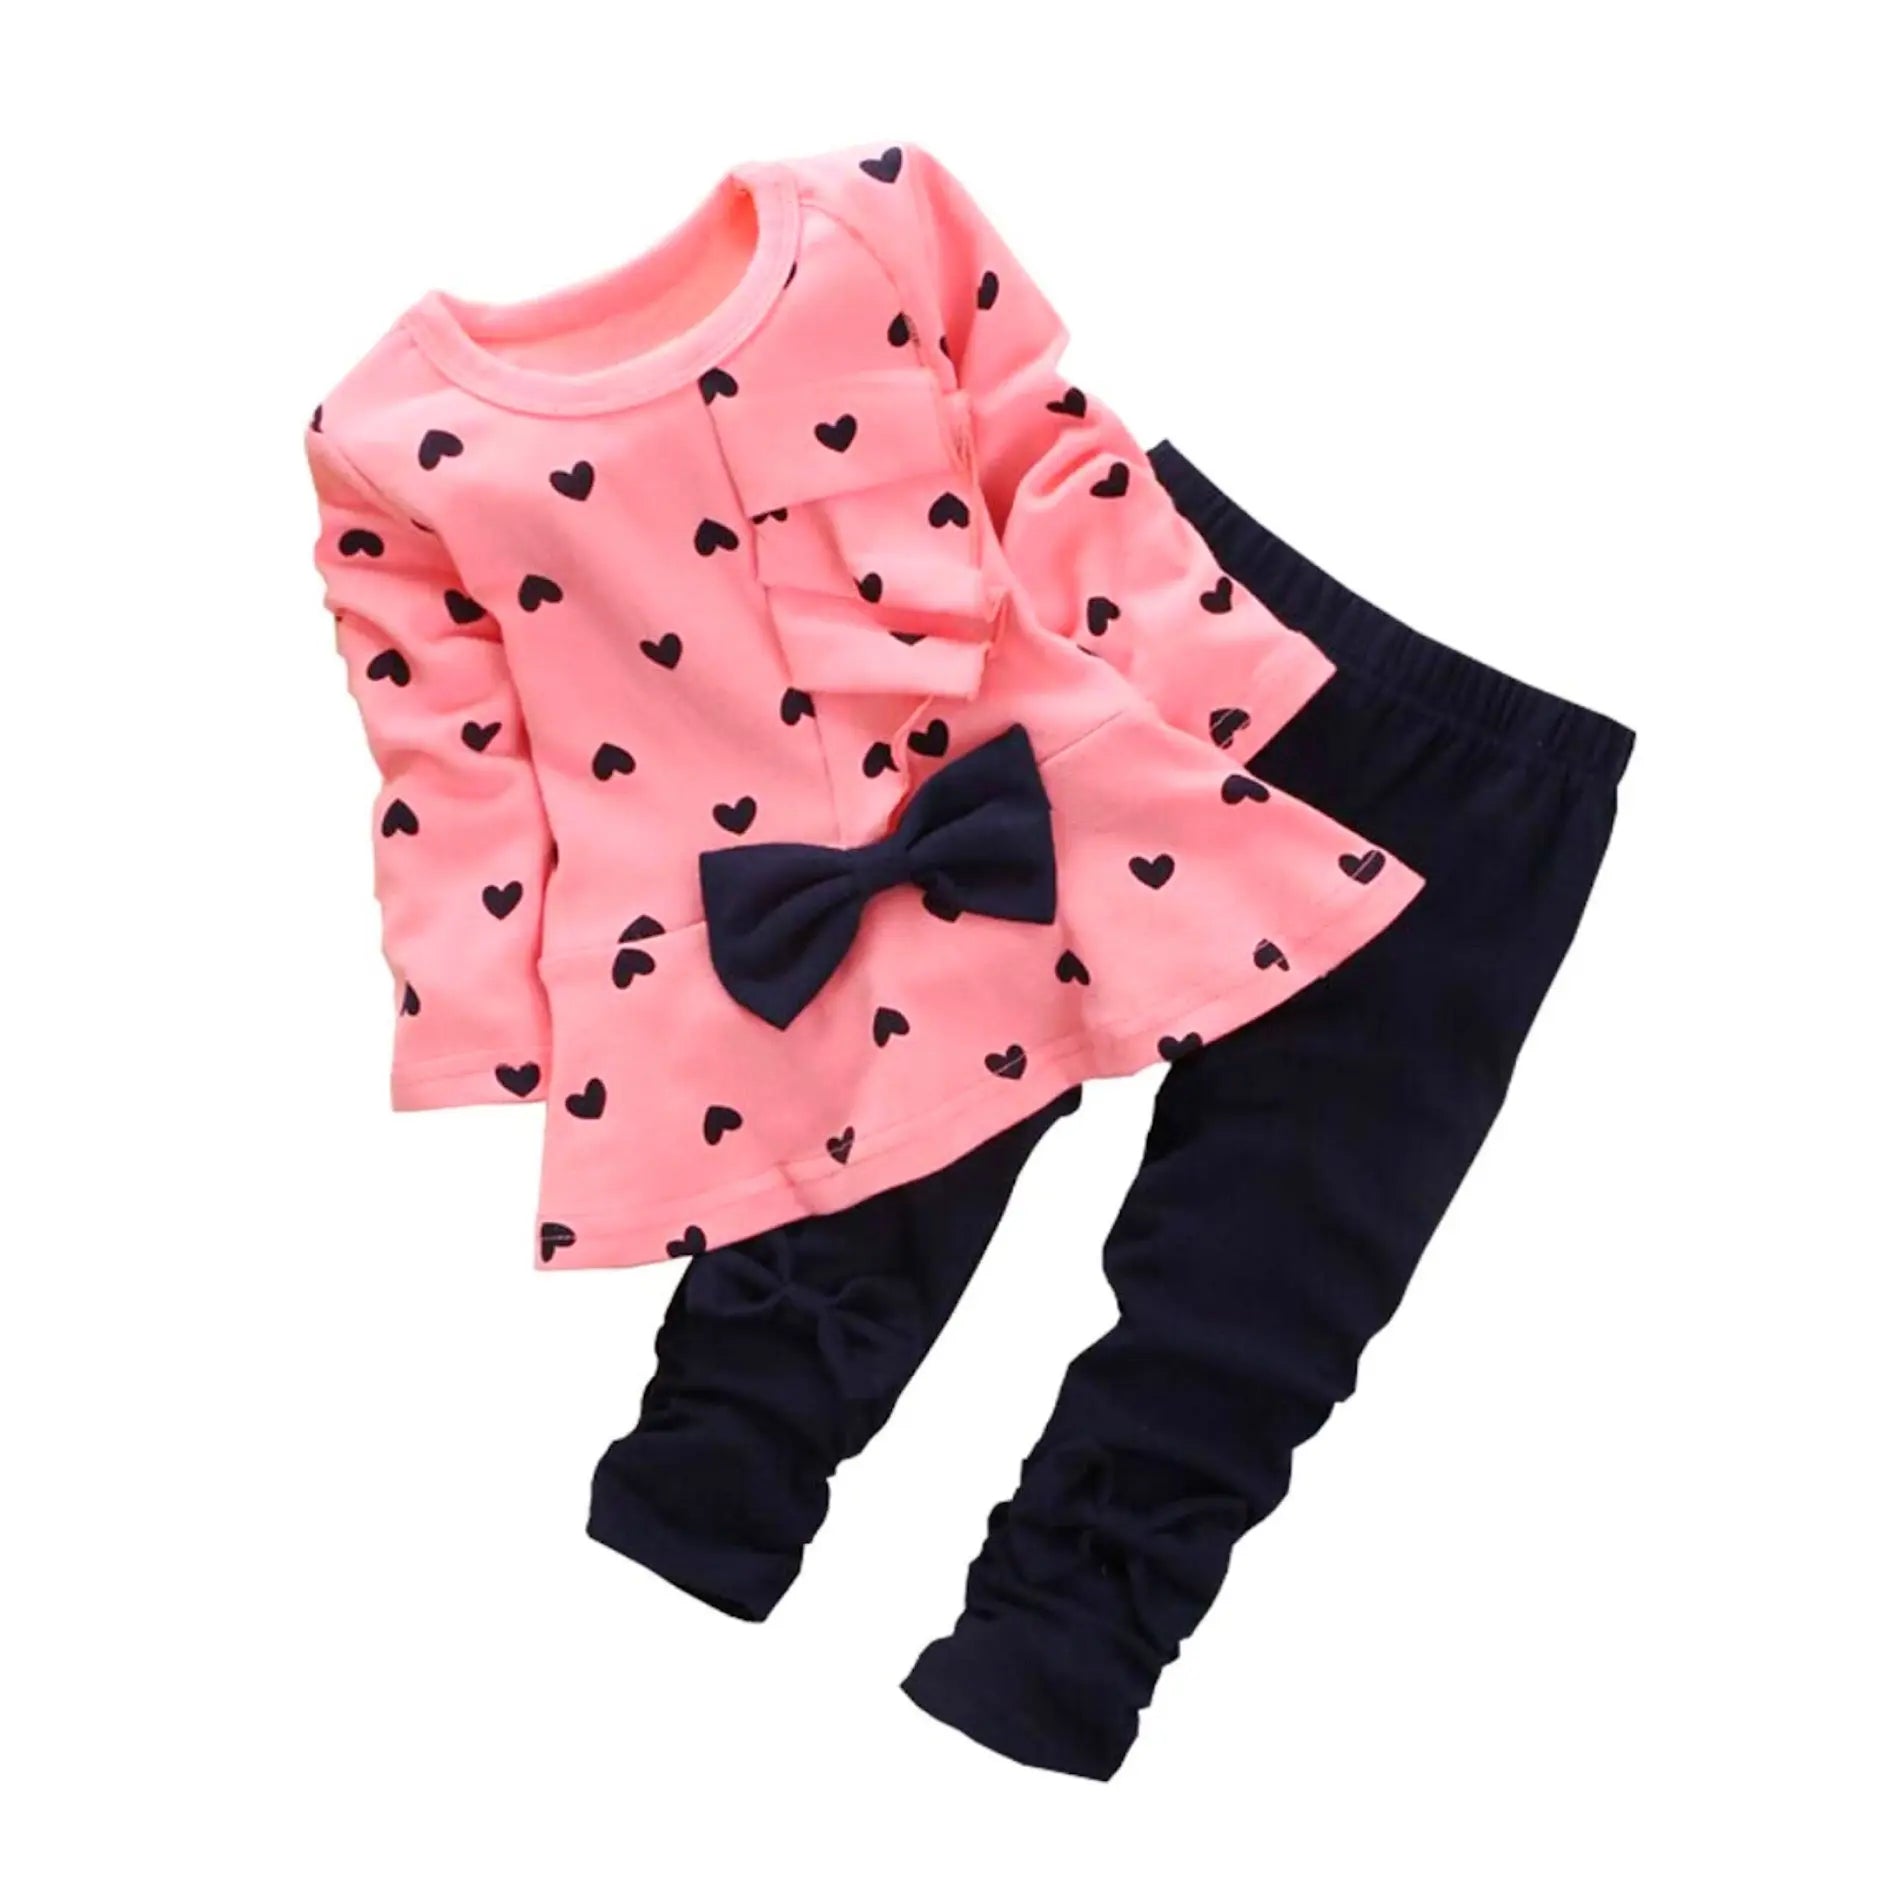 Toddler Girls Long Sleeve Ruffled Bow Top Heart Print and Pants Set, Main Image Pink